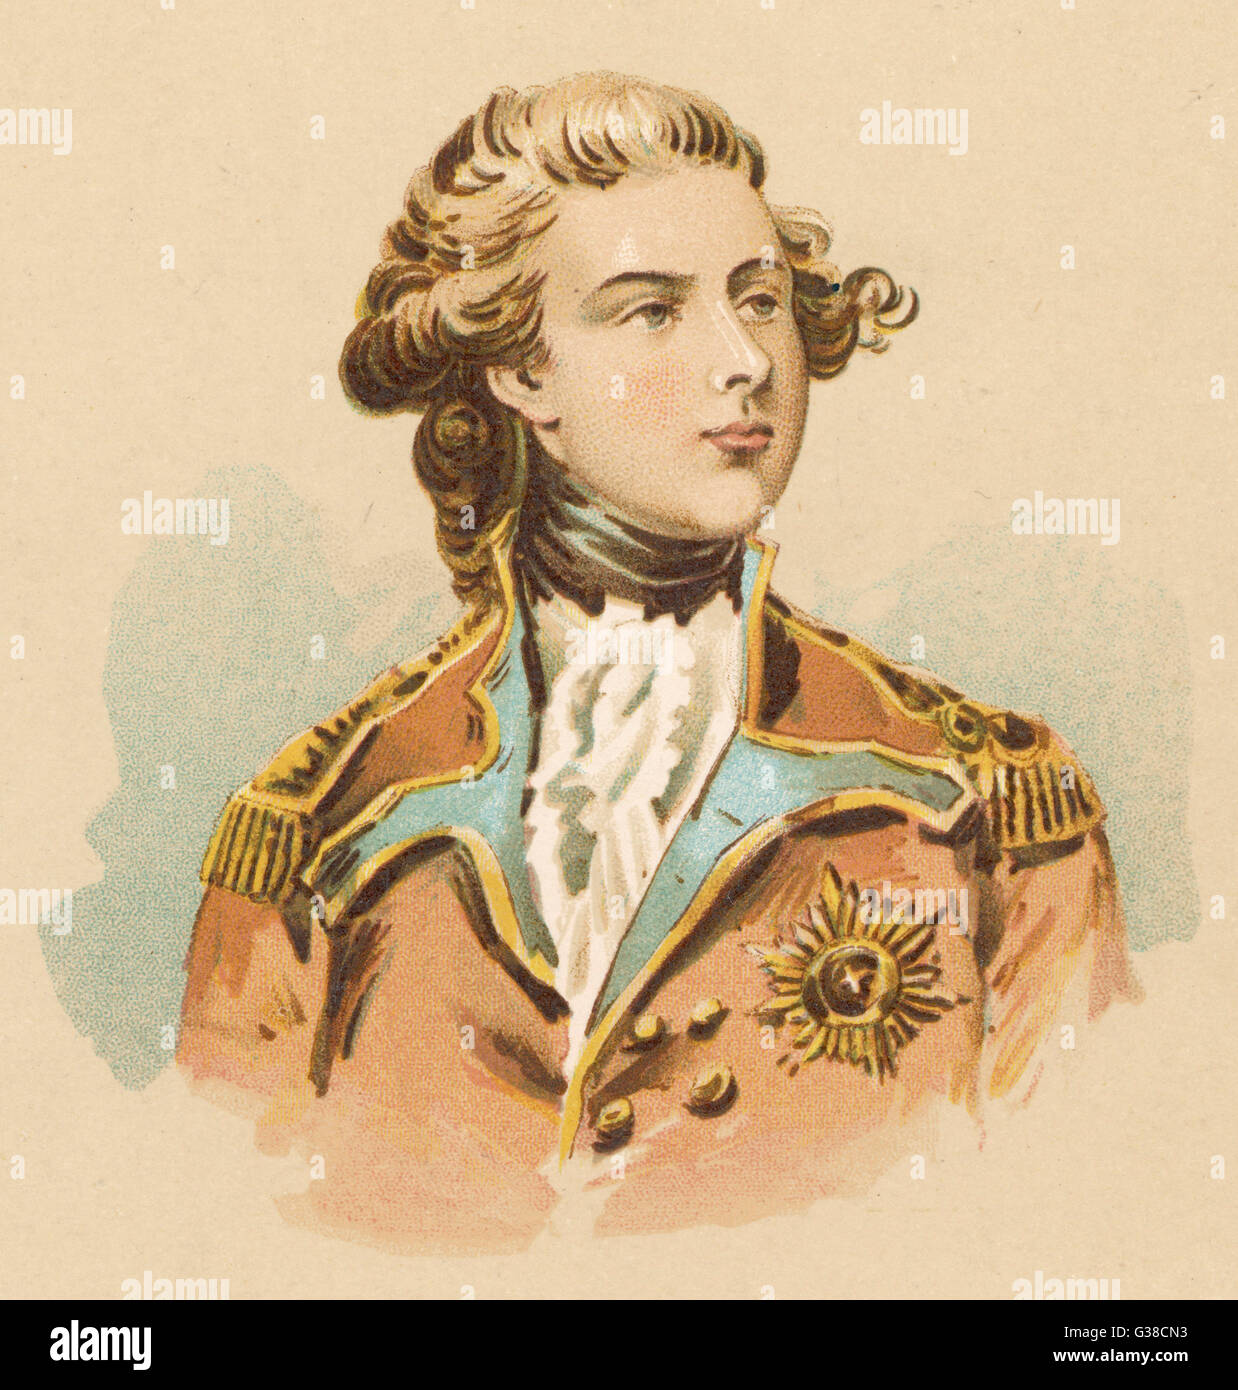 GEORGE IV. von ENGLAND - als Prince Of Wales Datum: 1762-1830 Stockfoto